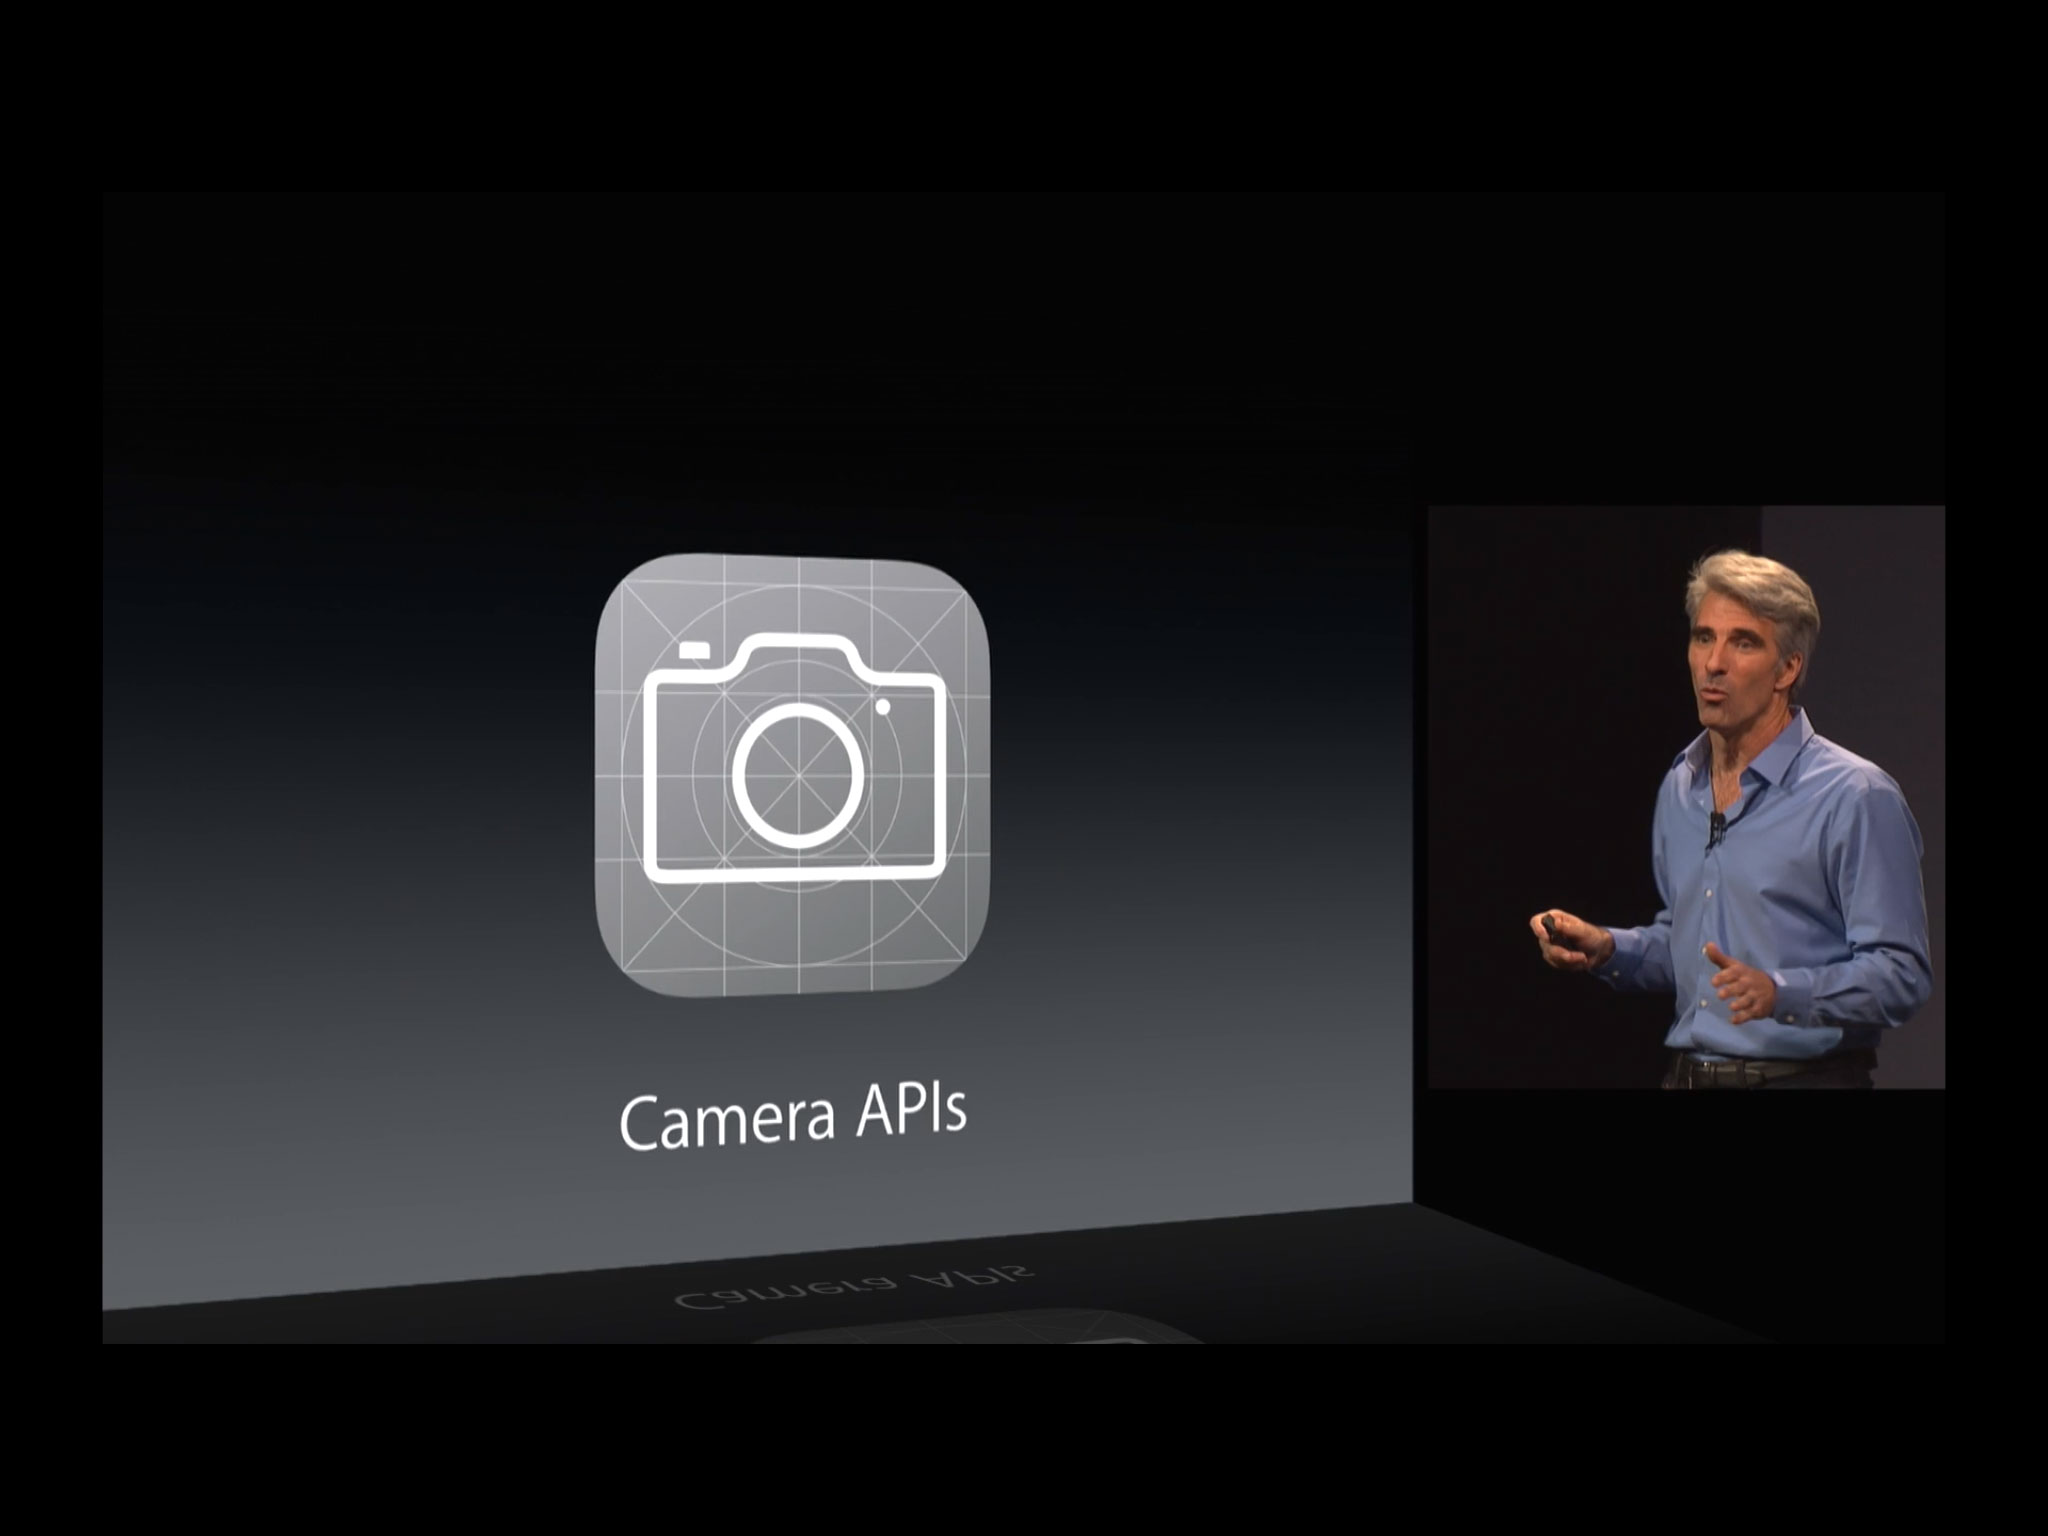 Manual camera controls in iOS 8: Explained